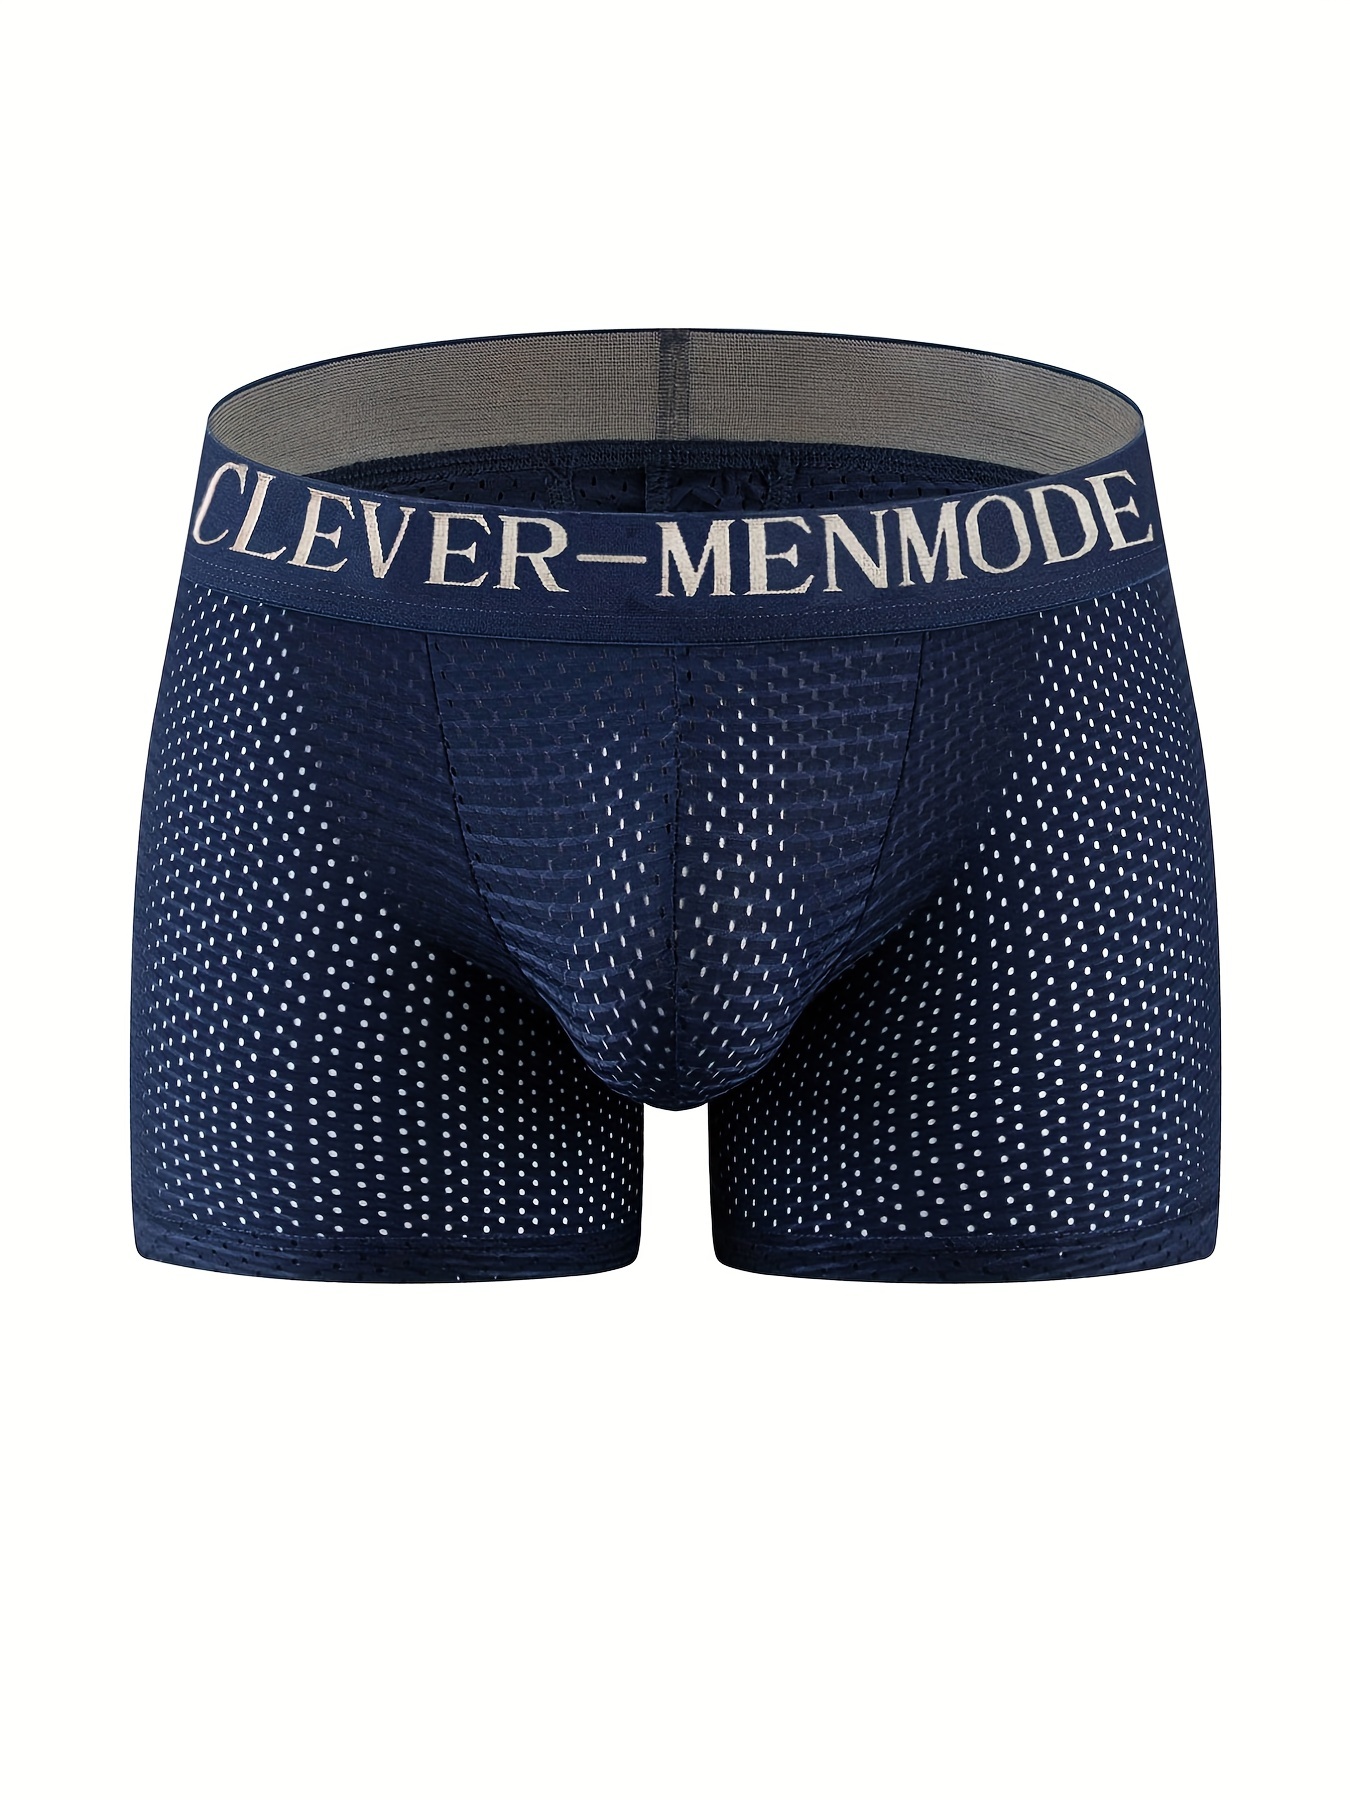 Men's Boxer Brief Short Mesh Quick Dry Underwear Breathable Trunk  Clever-menmode